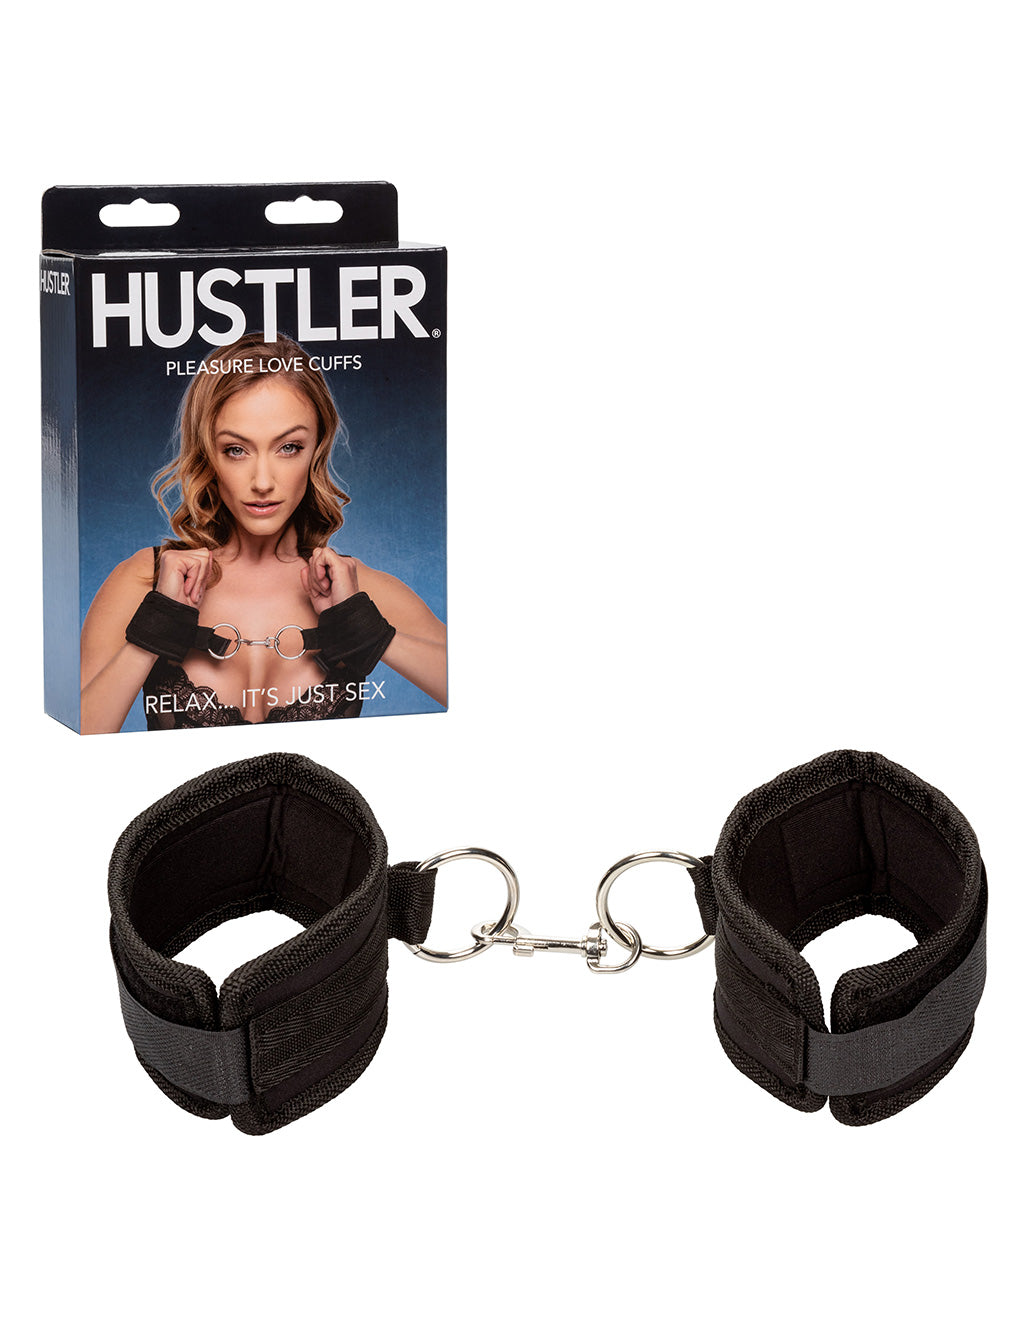 Hustler® Pleasure Love Cuffs- With box